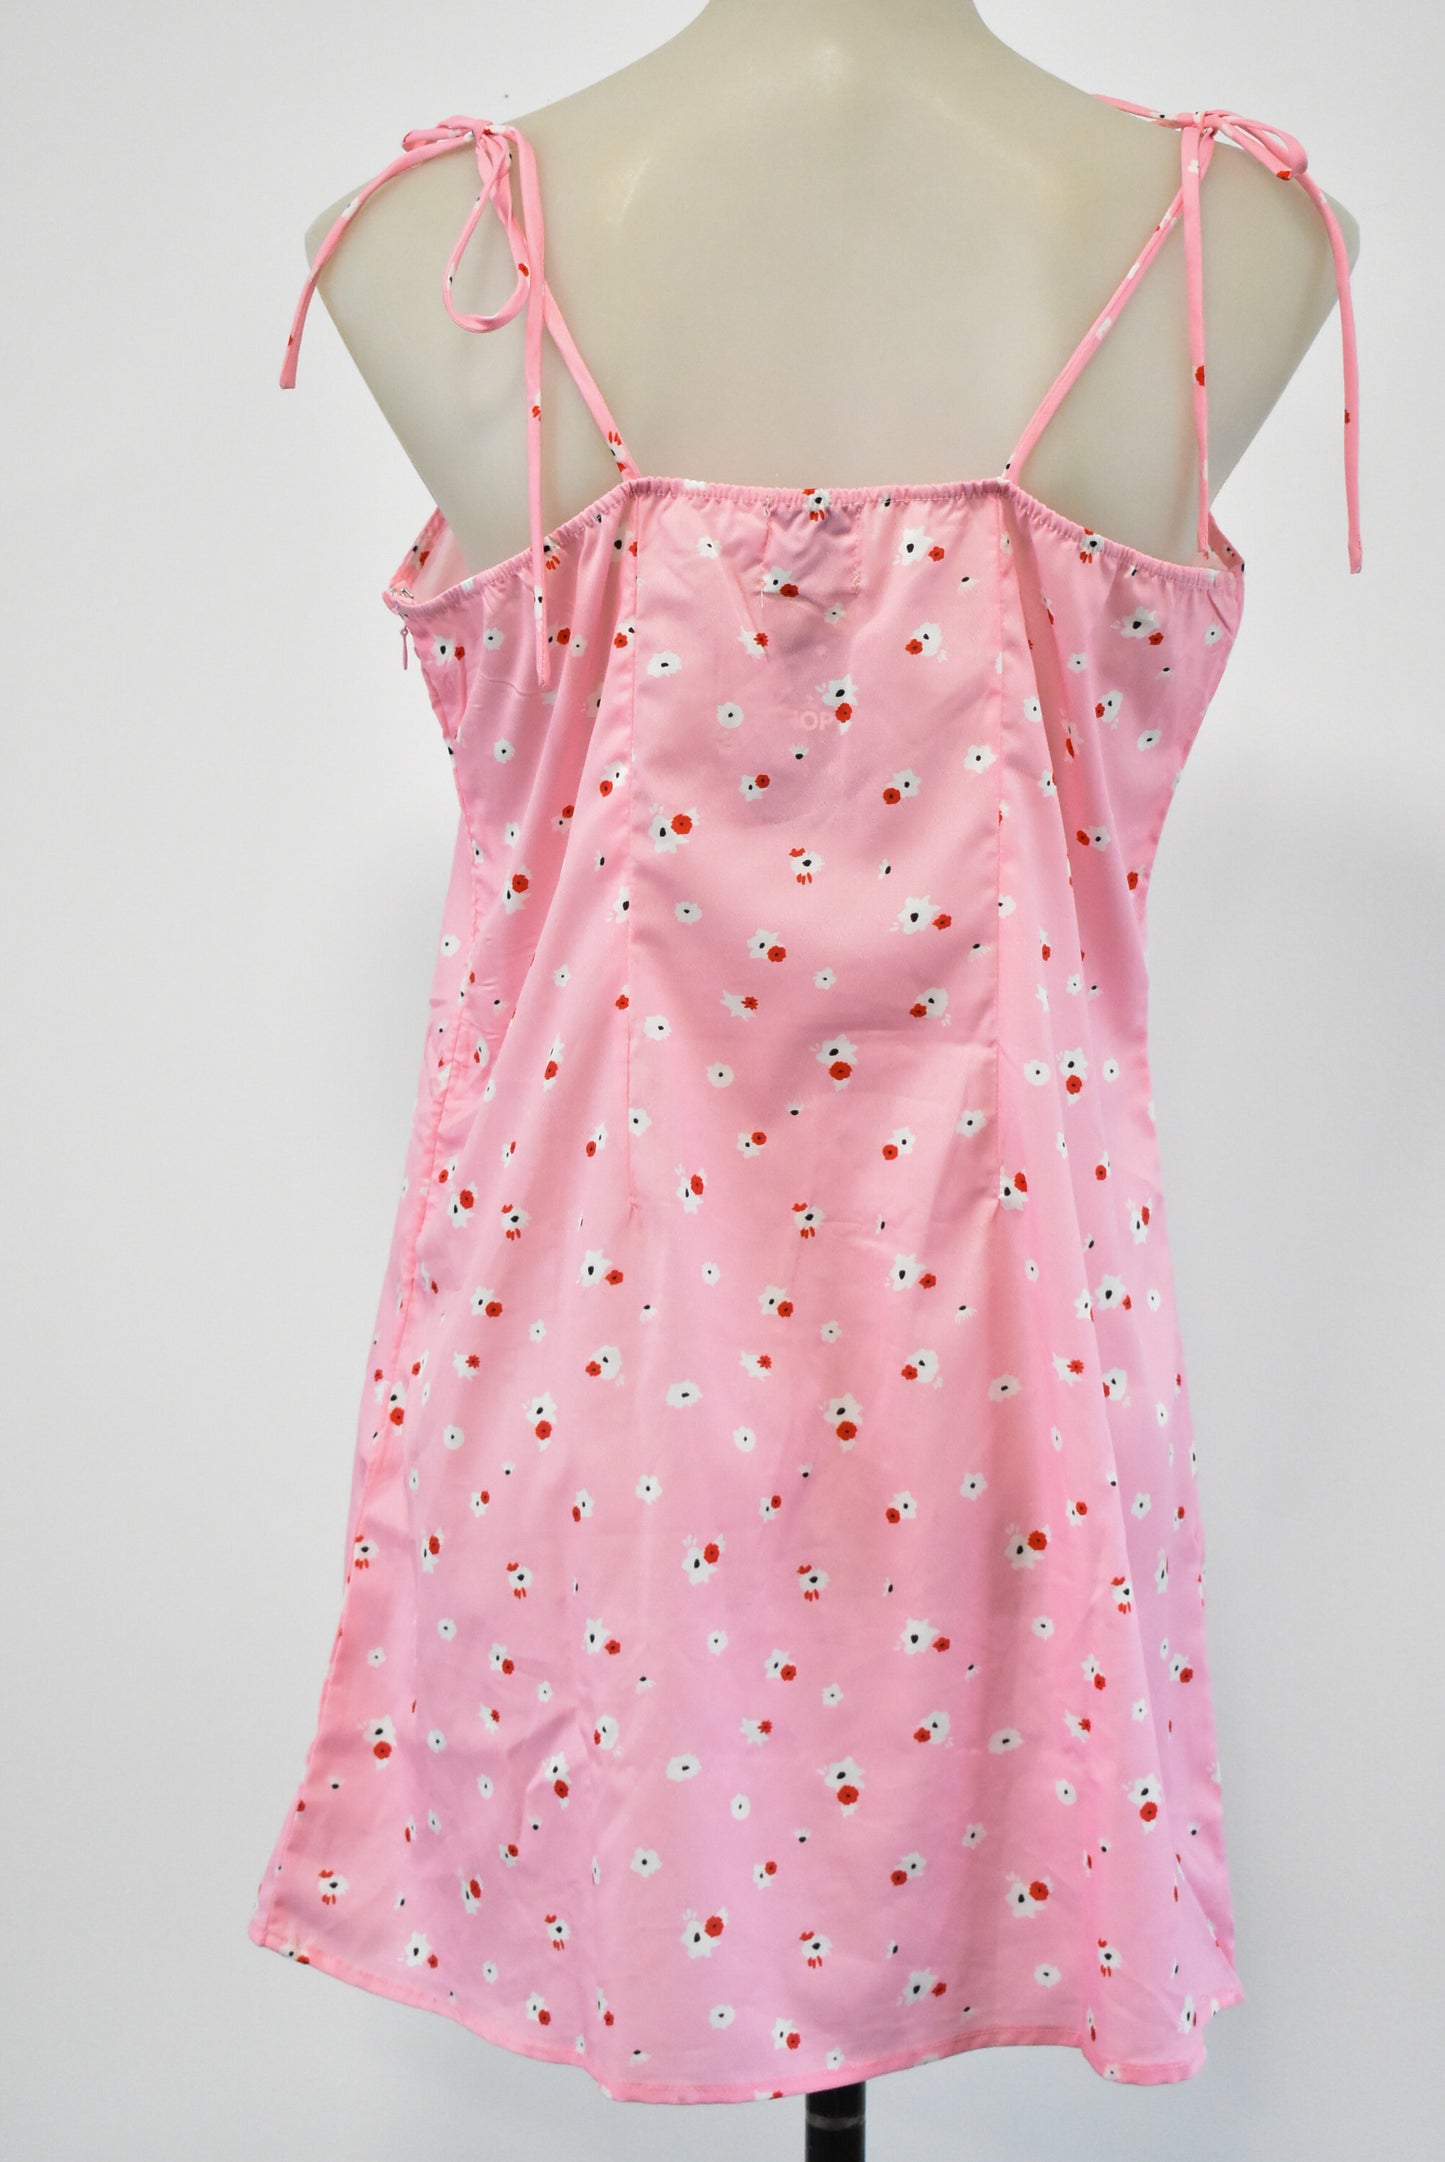 Polly light pink floral mini dress, size 16